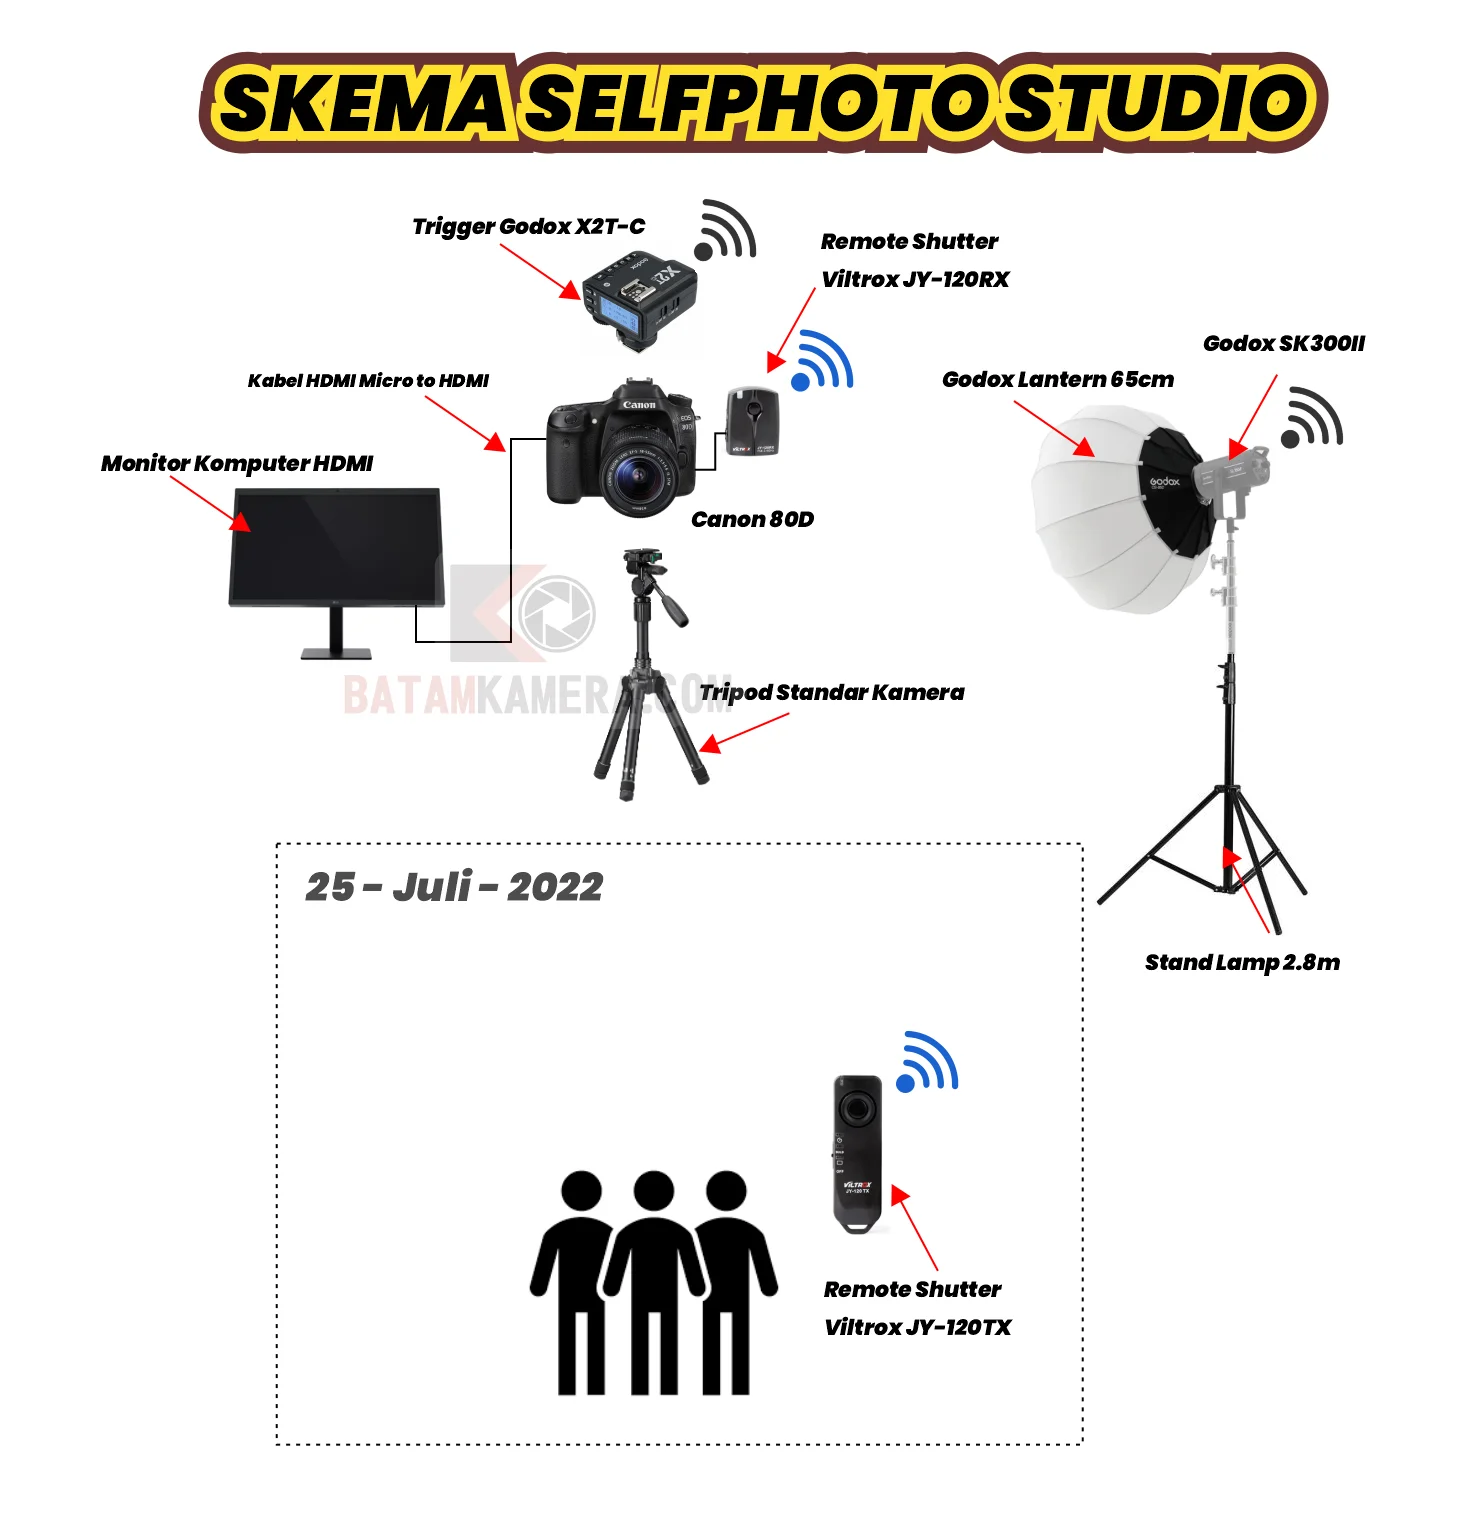 How To Make Self Photo Studio - Kamerana